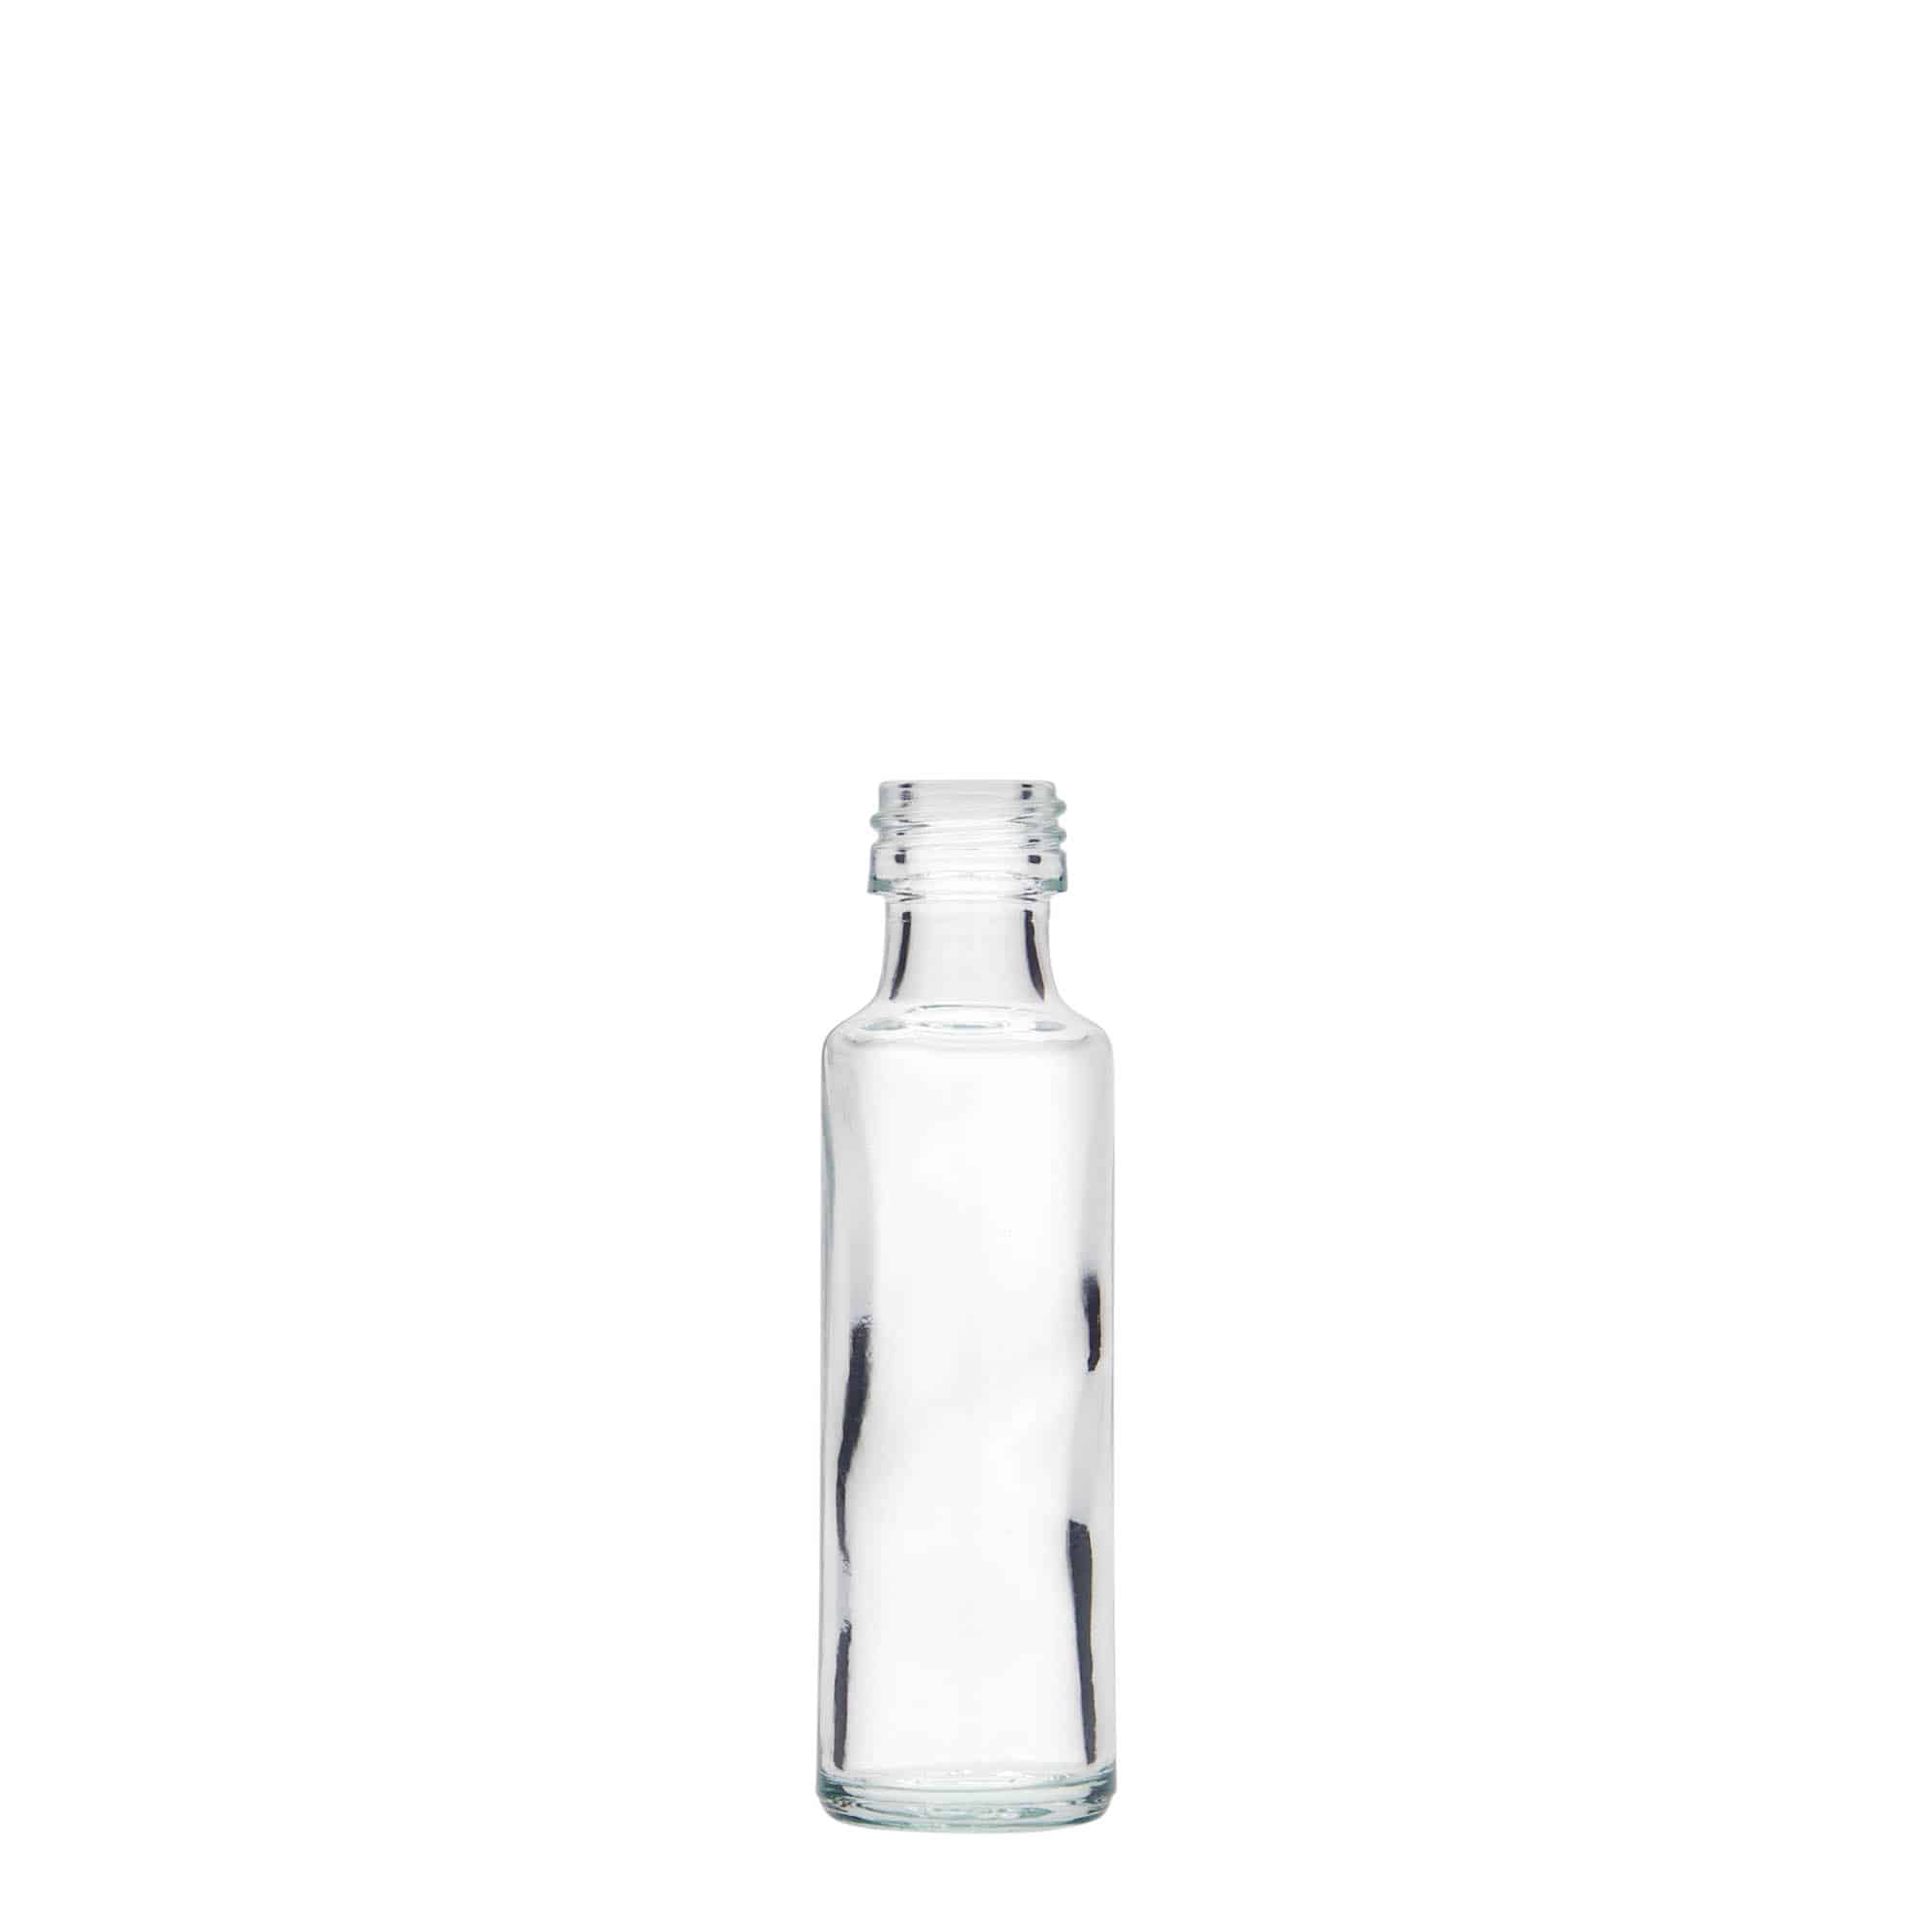 20 ml glass bottle 'Dorica', closure: PP 18